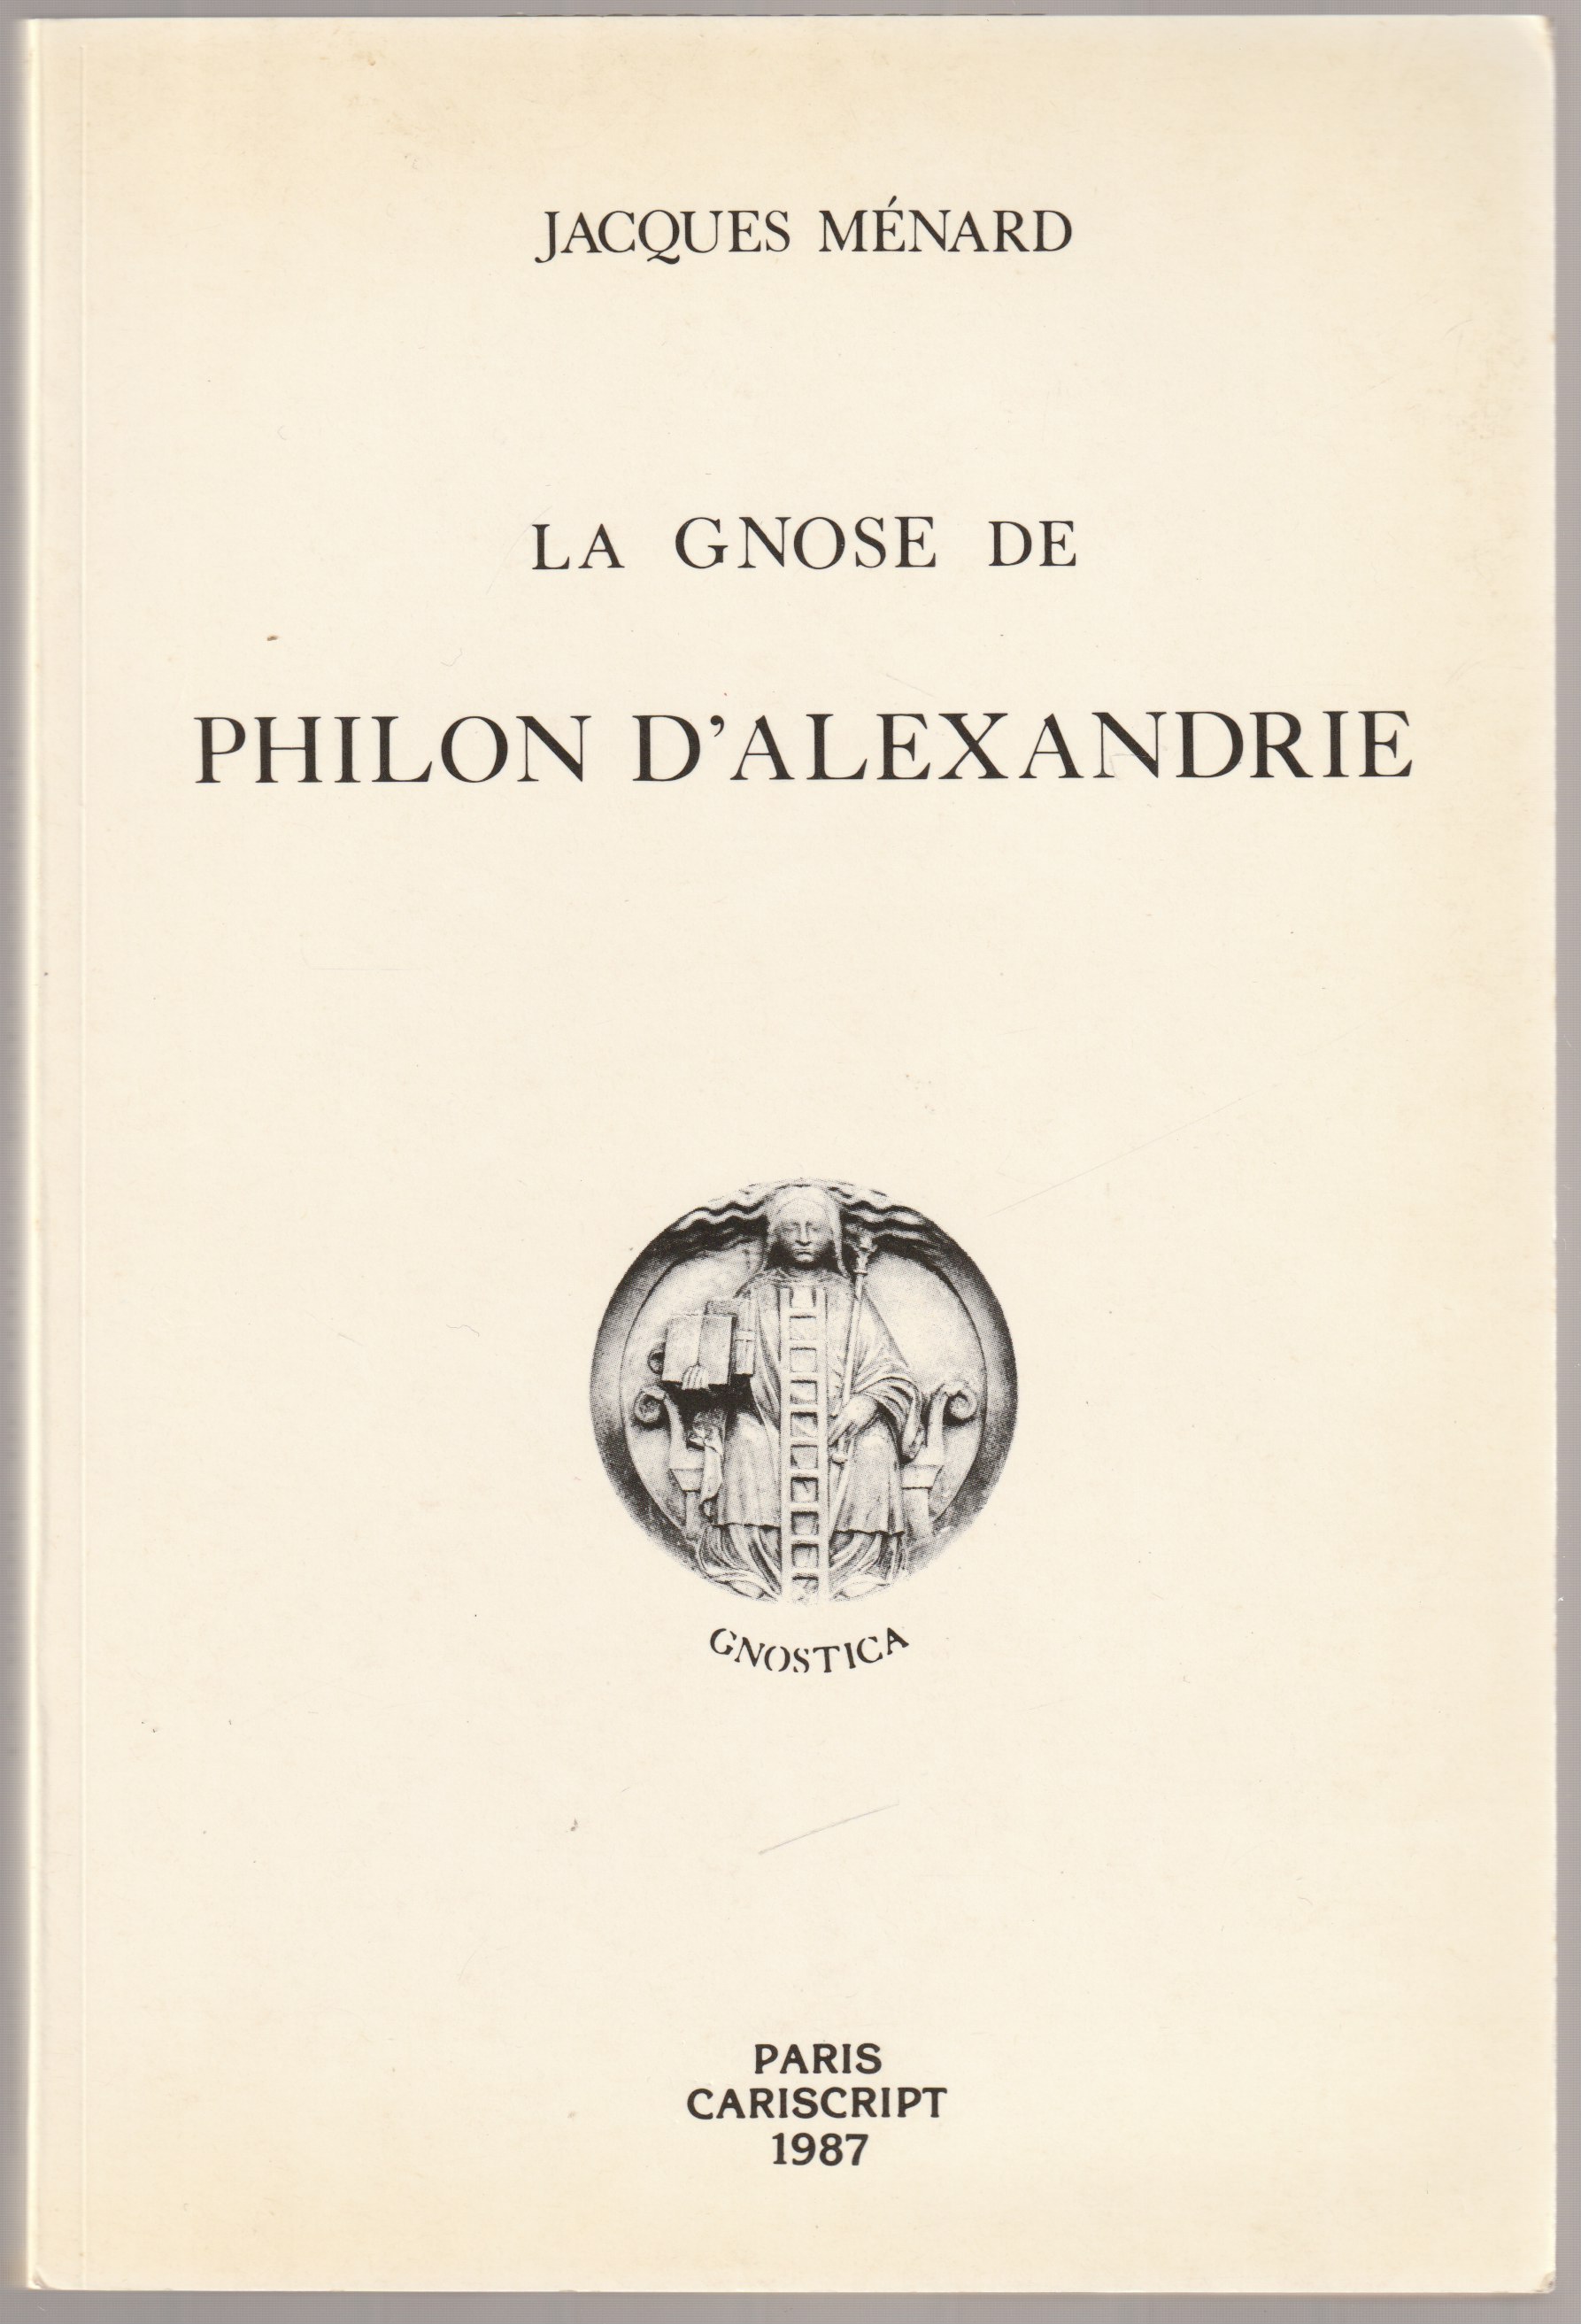 La gnose de Philon d'Alexandrie.